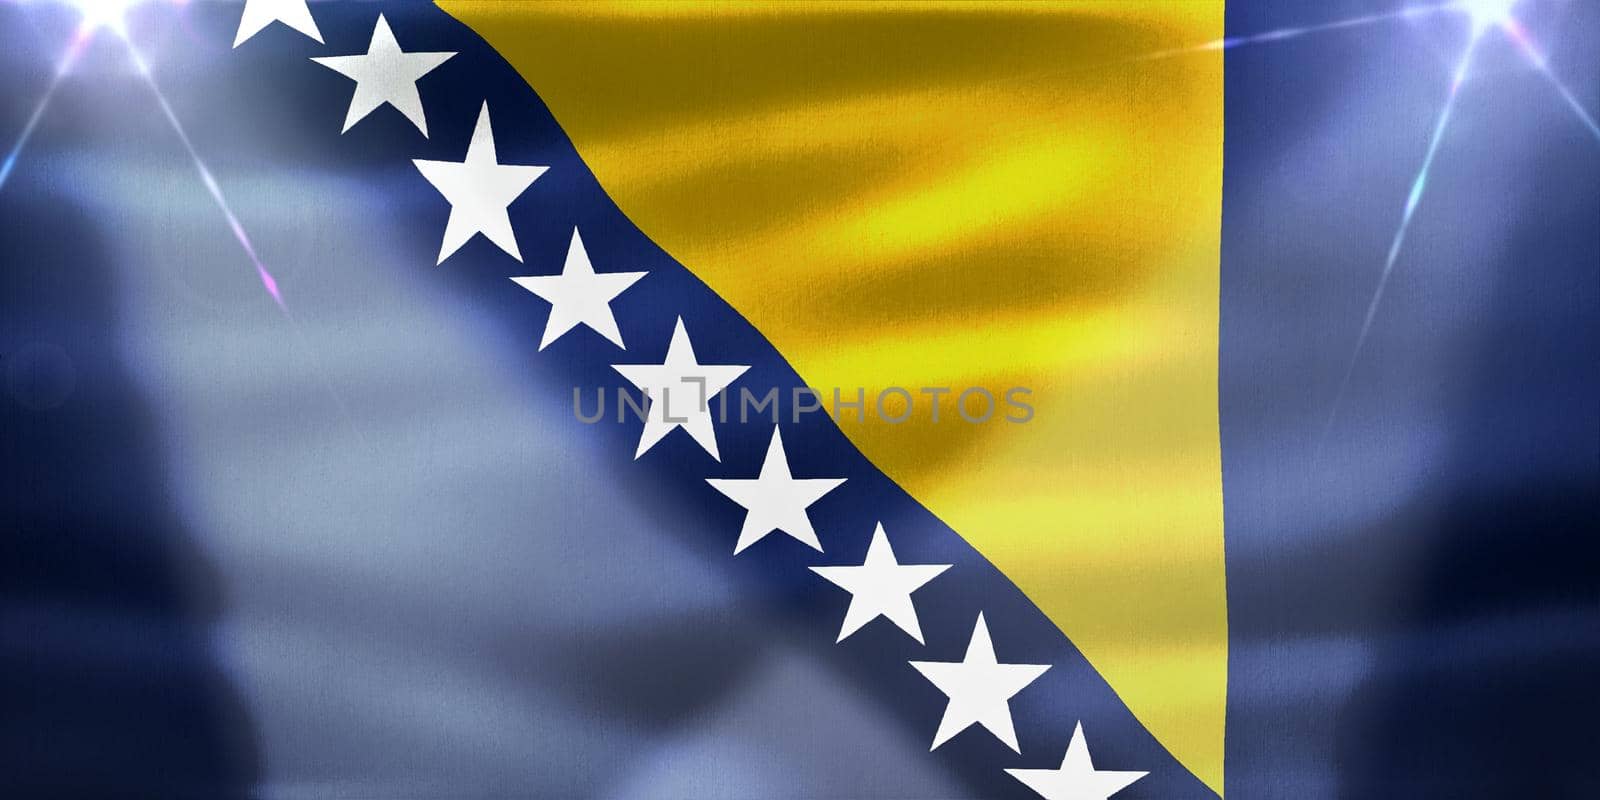 Bosnia and Herzegovina flag - realistic waving fabric flag by MP_foto71